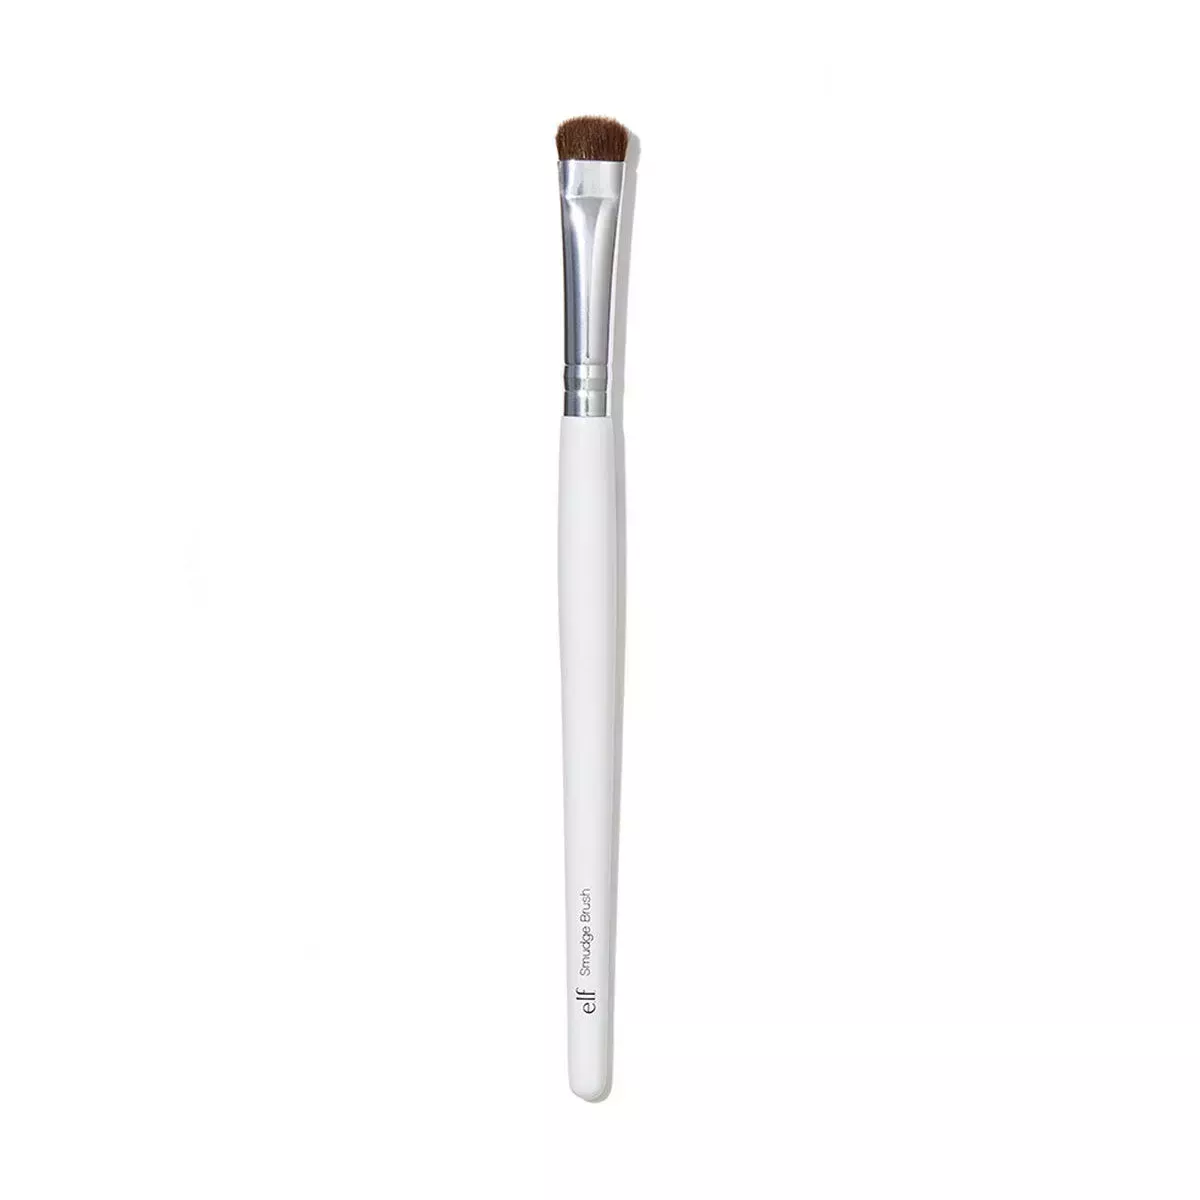 a white eyeshadow smudge brush